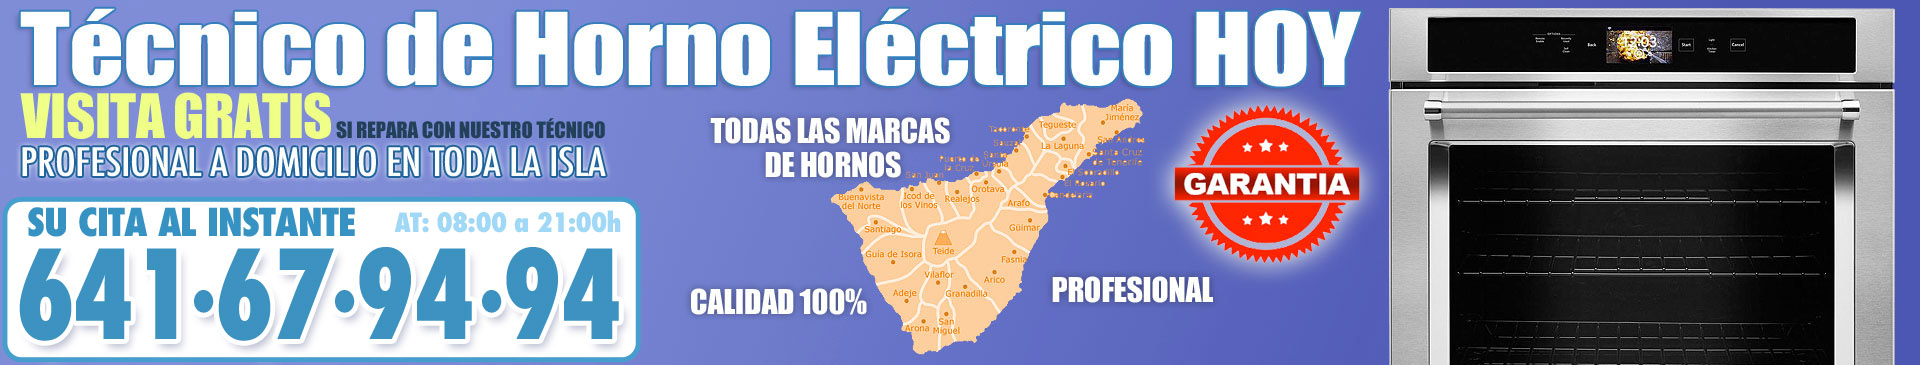 Servicio Técnico de Horno Eléctrico en Tenerife